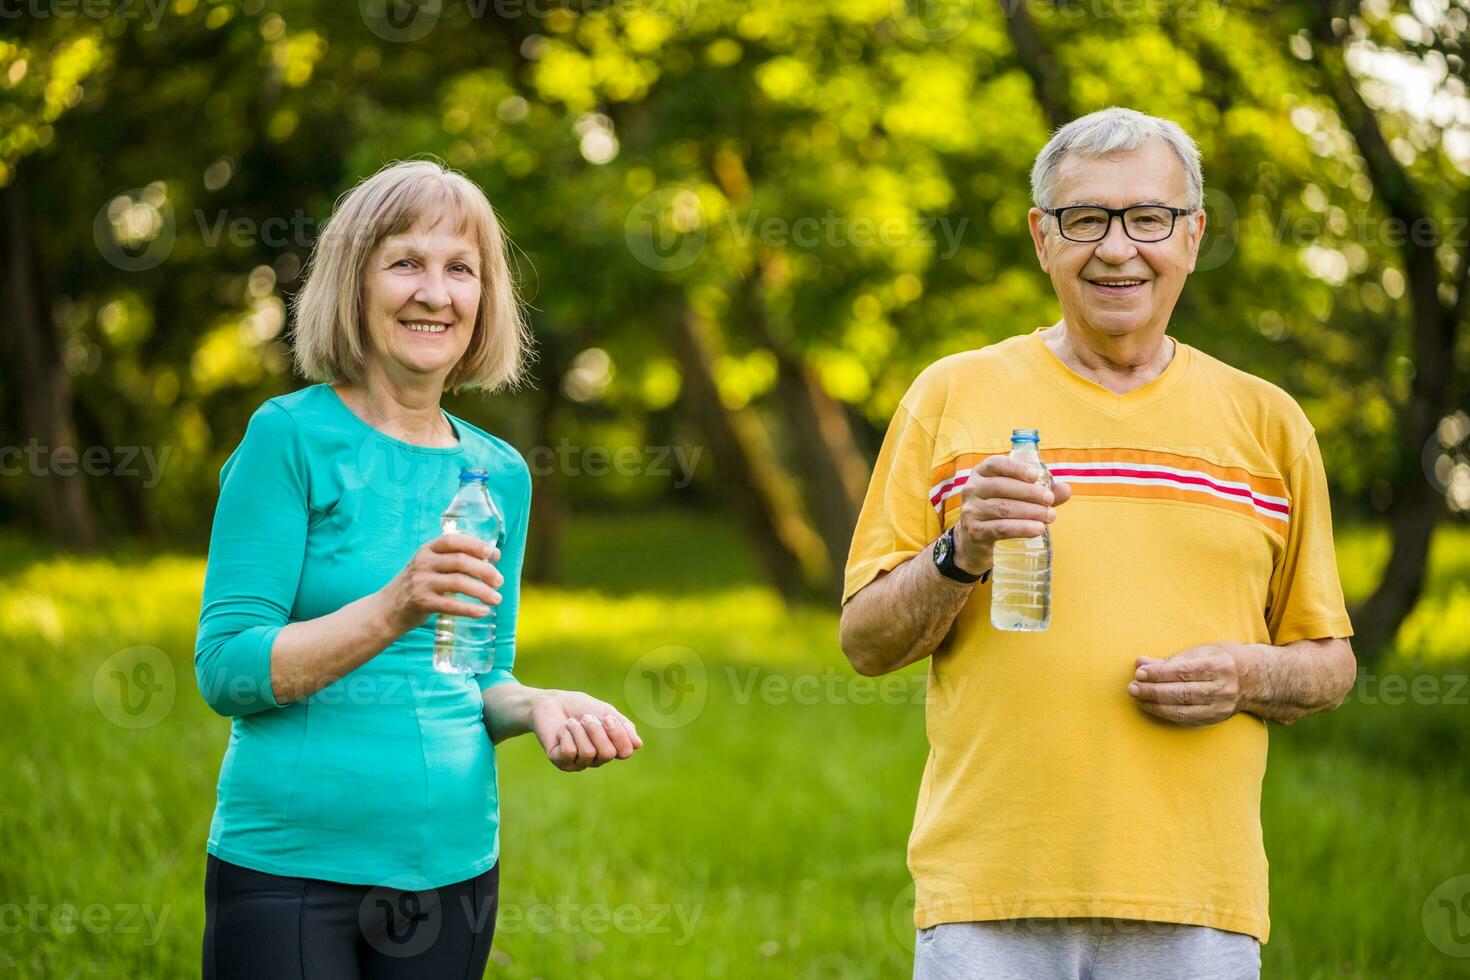 A senior couple doing physical exercises photo